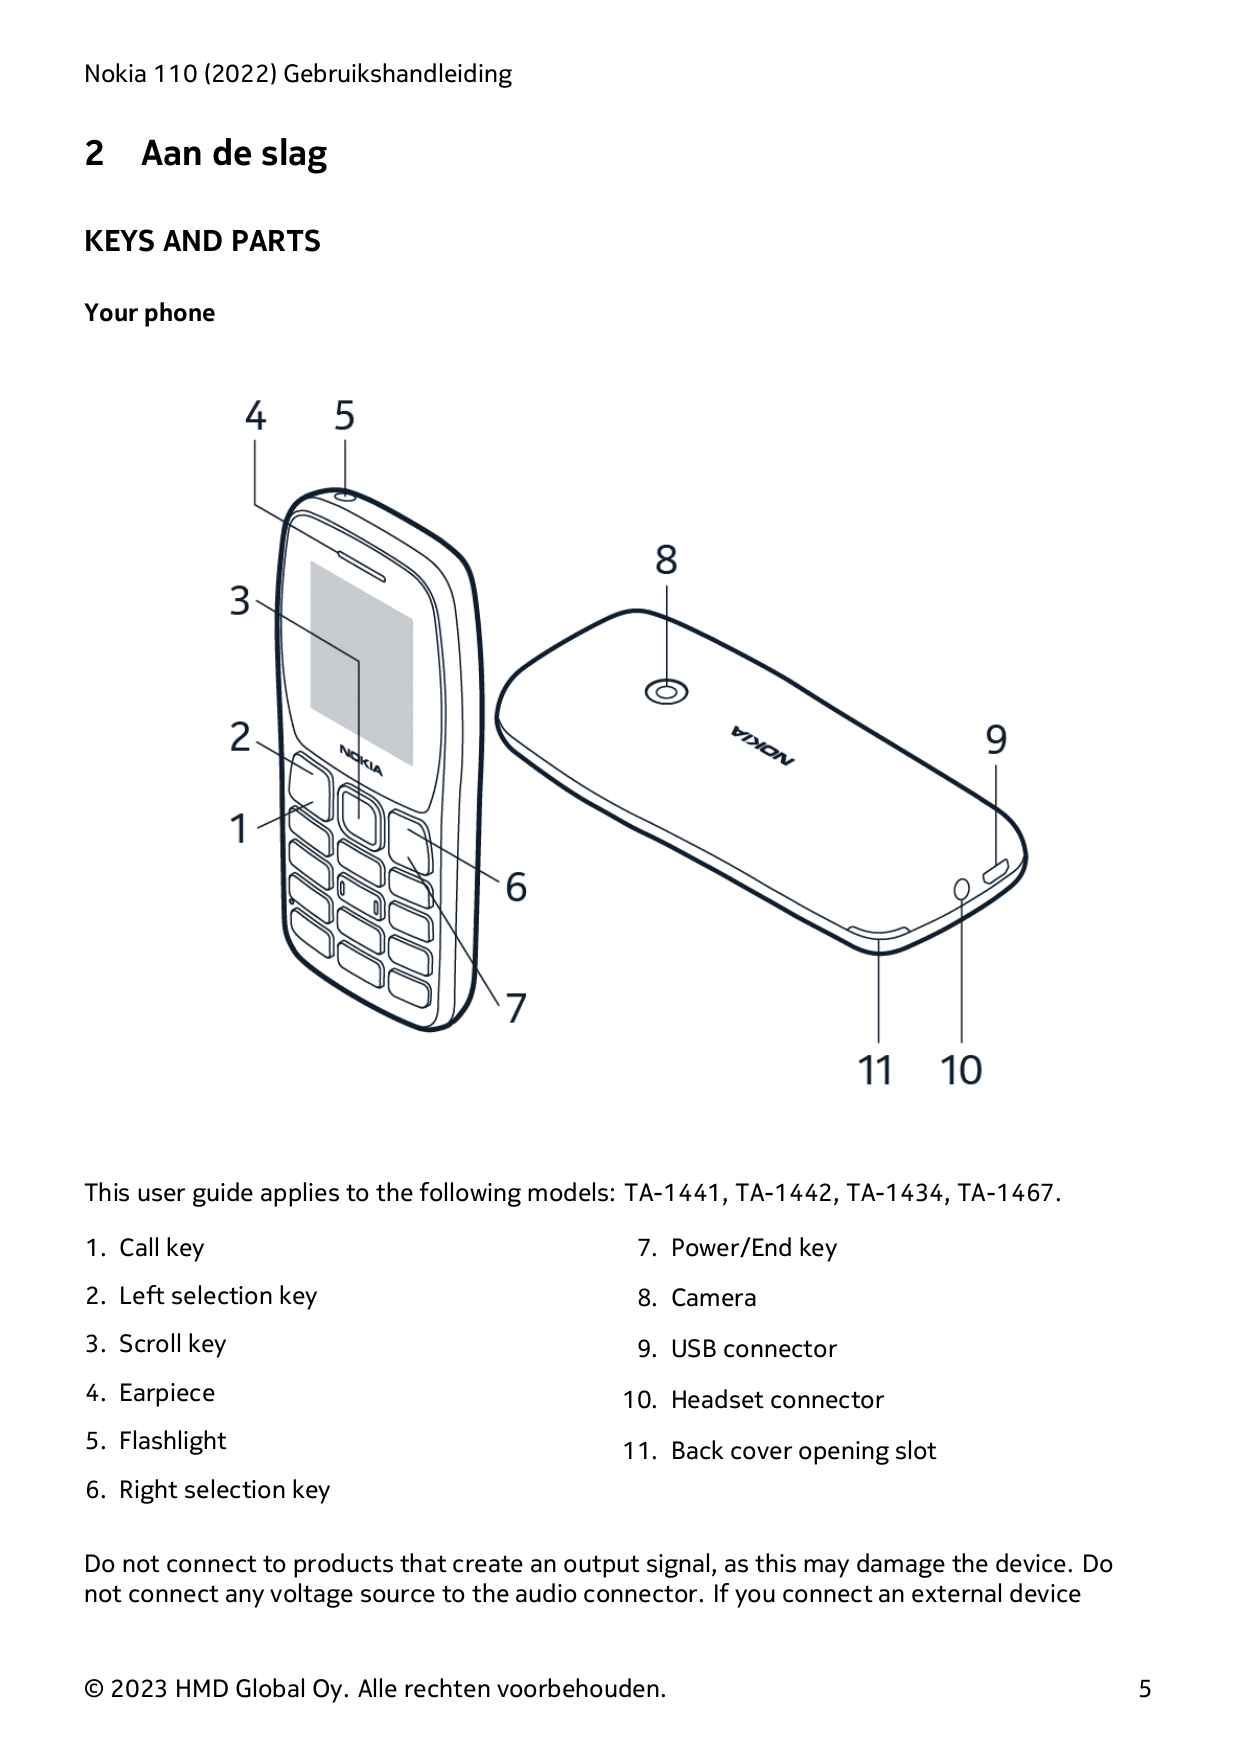 Nokia 110 (2022) Gebruikshandleiding2Aan de slagKEYS AND PARTSYour phoneThis user guide applies to the following models: TA-1441